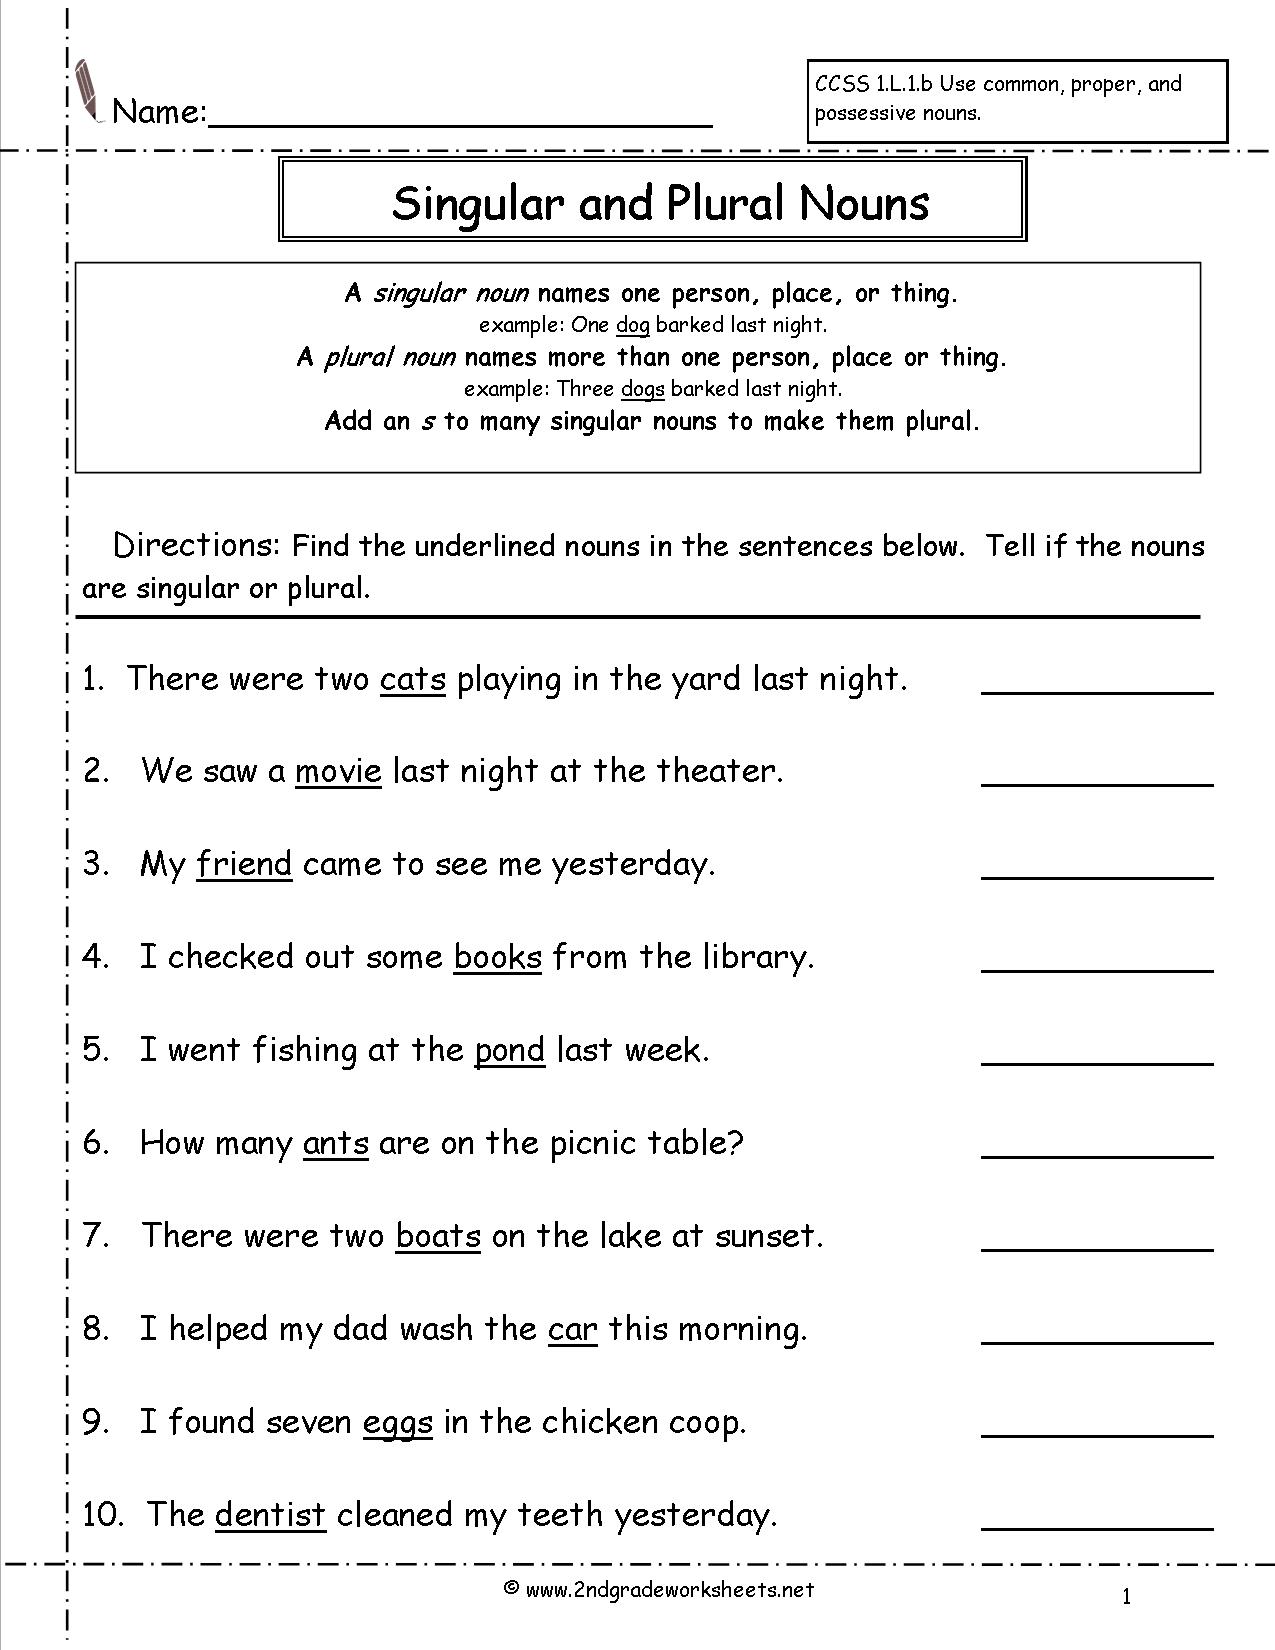 singular-pronouns-worksheets-home-work-pinterest-pronoun-worksheets-and-worksheets